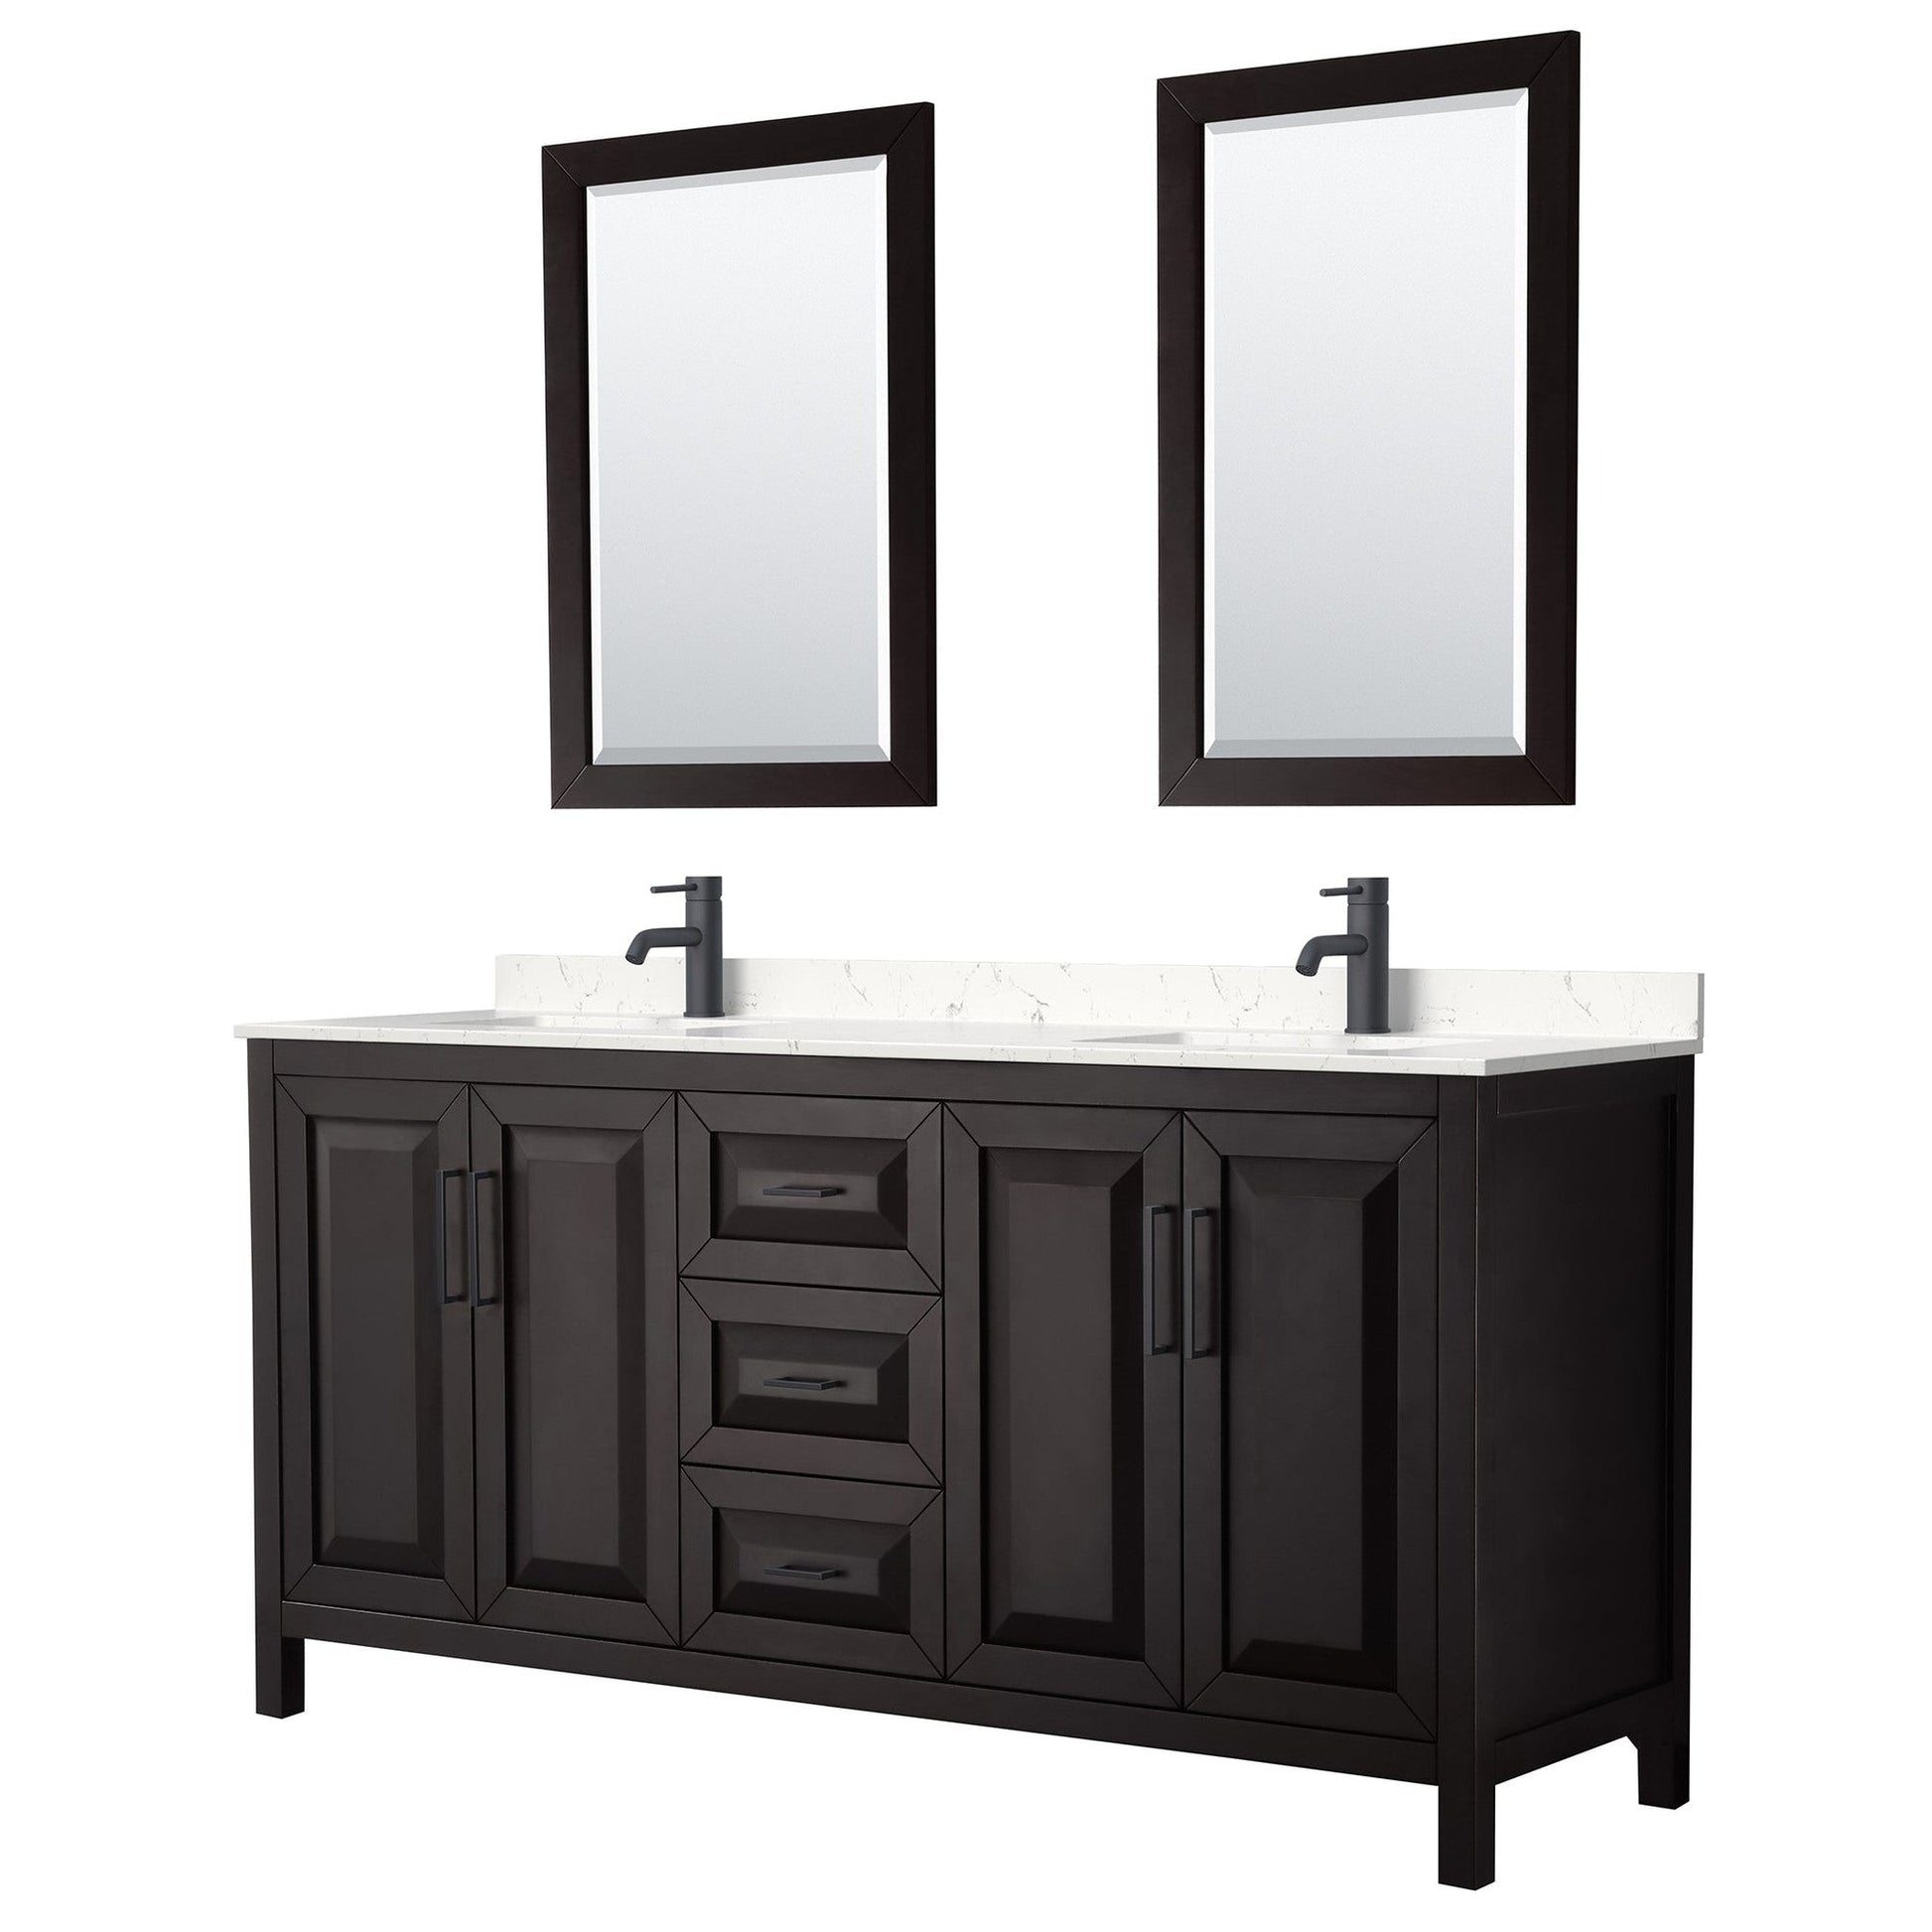 Daria 72" Double Bathroom Vanity in Dark Espresso, Carrara Cultured Marble Countertop, Undermount Square Sinks, Matte Black Trim, 24" Mirrors